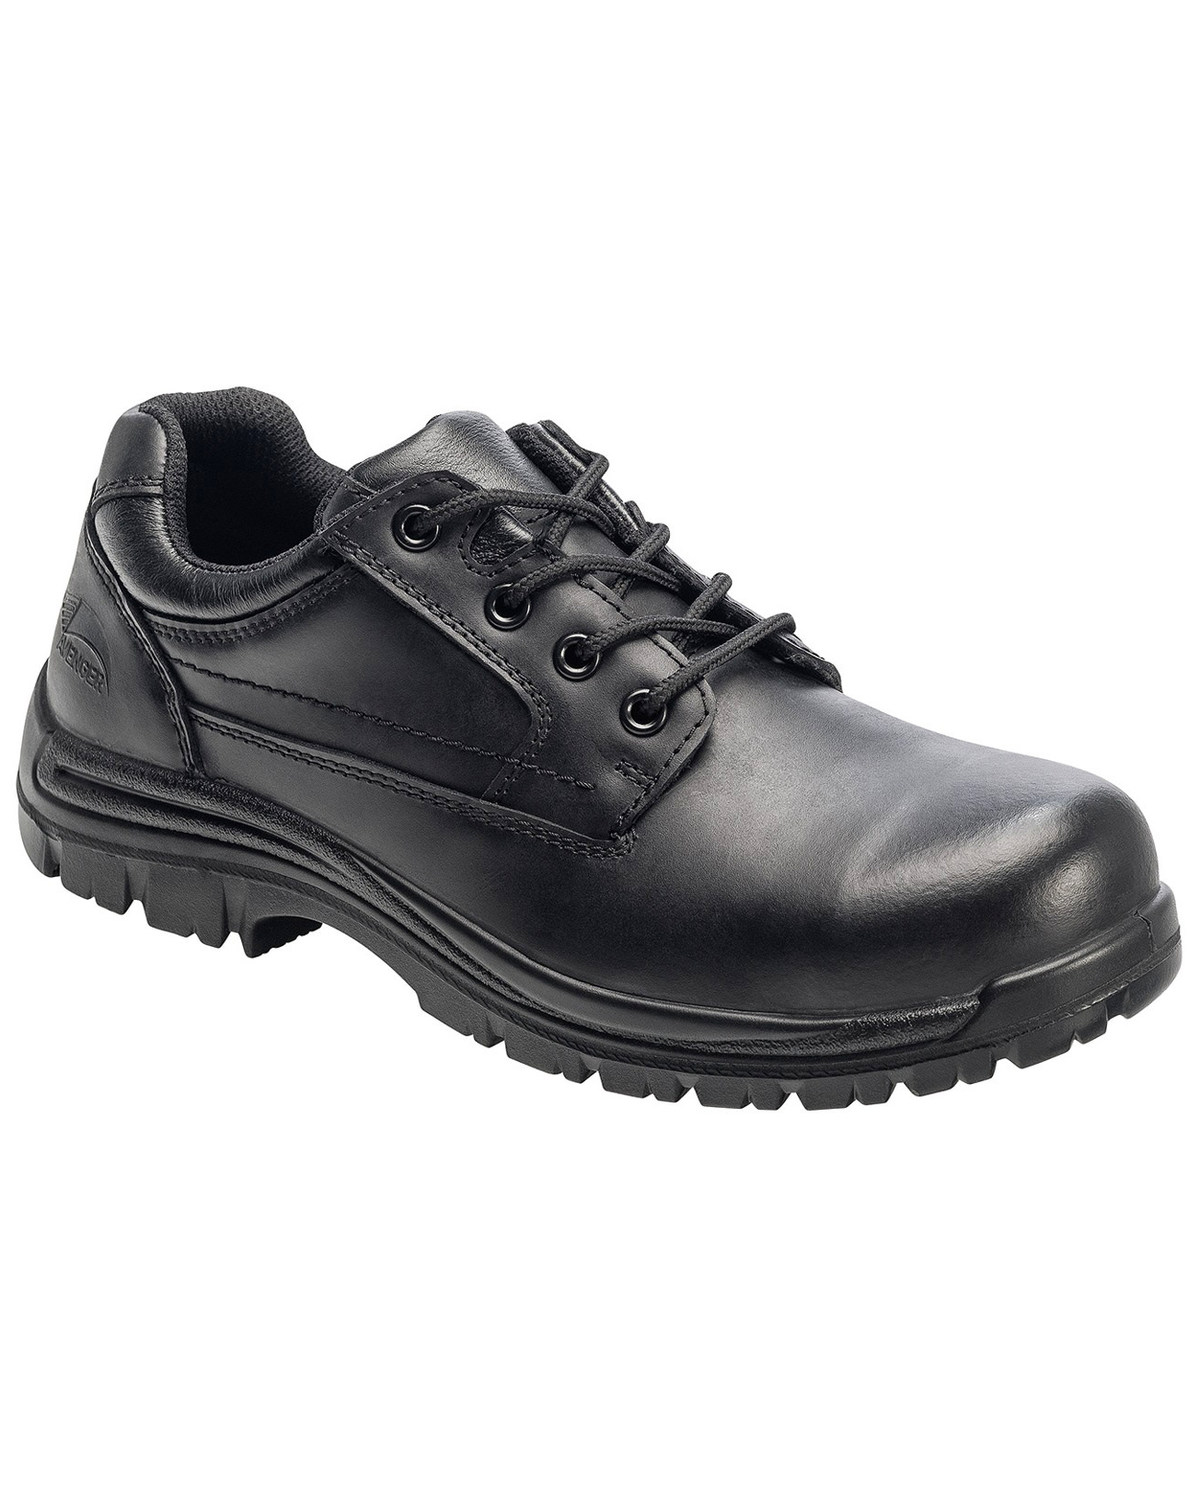 slip resistant work shoes mens